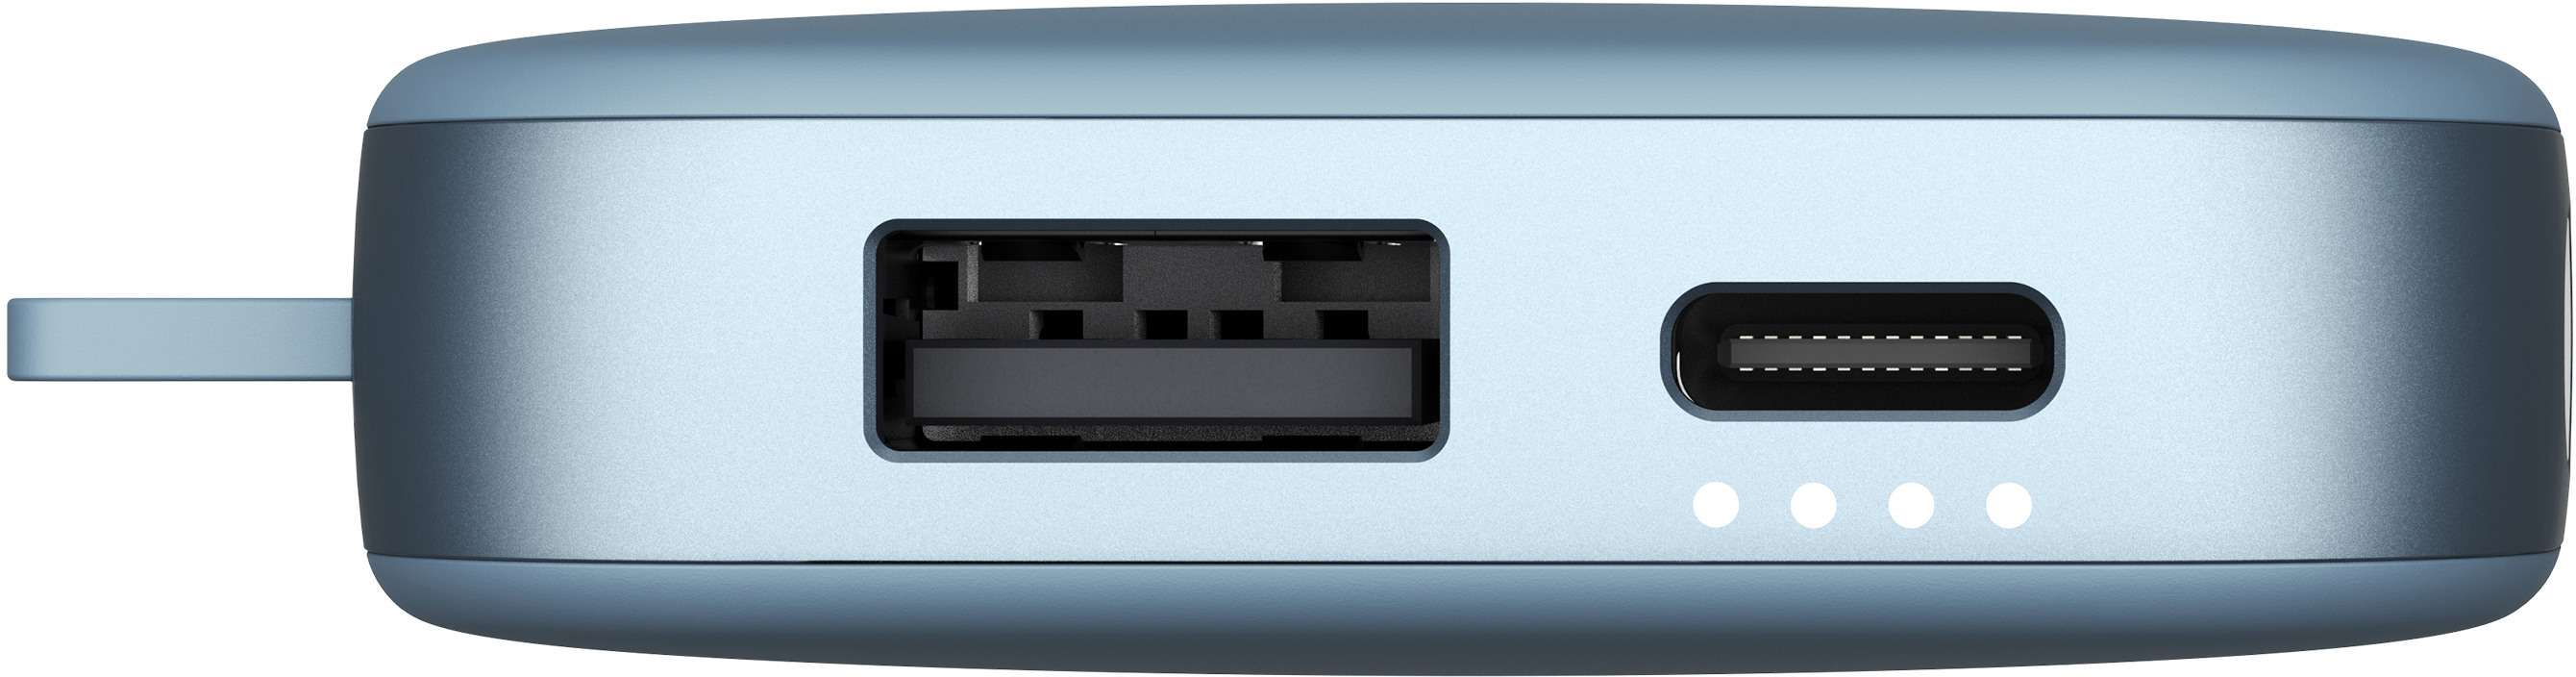 FRESH'N REBEL Powerbank 6000 mAh USB-C FC 2PB6100DV Dive Blue